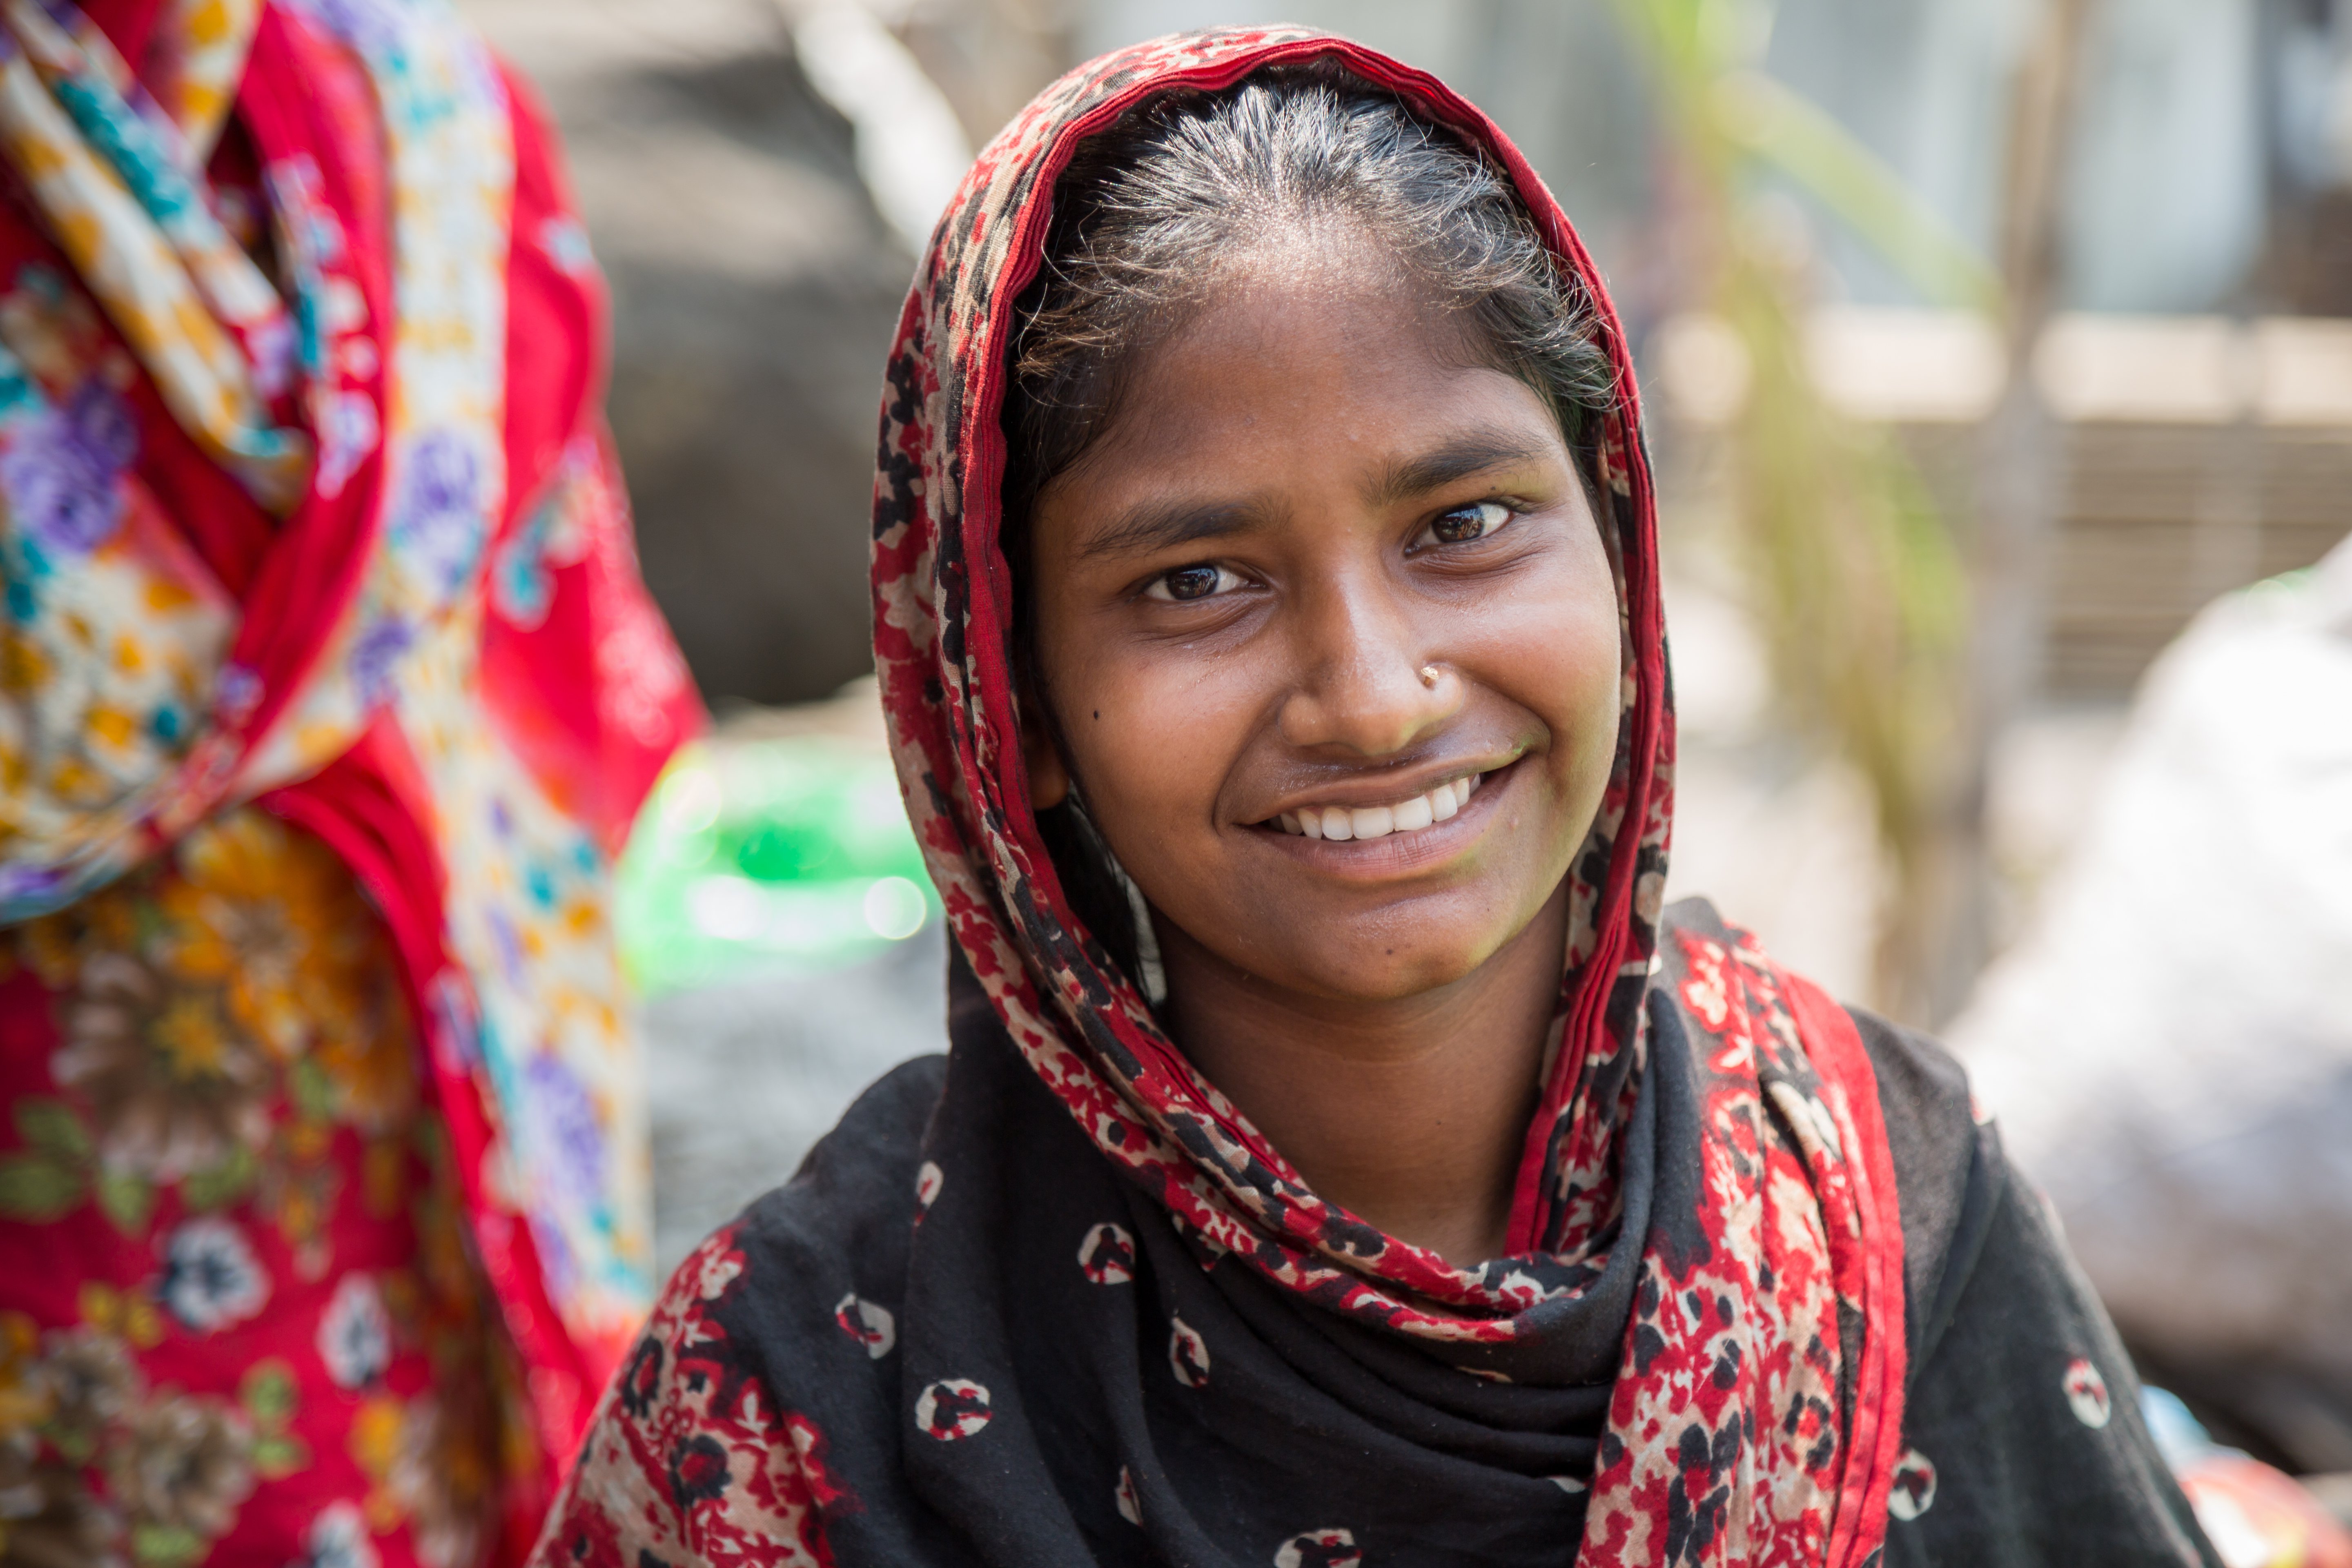 Adolescent girl in Bangladesh